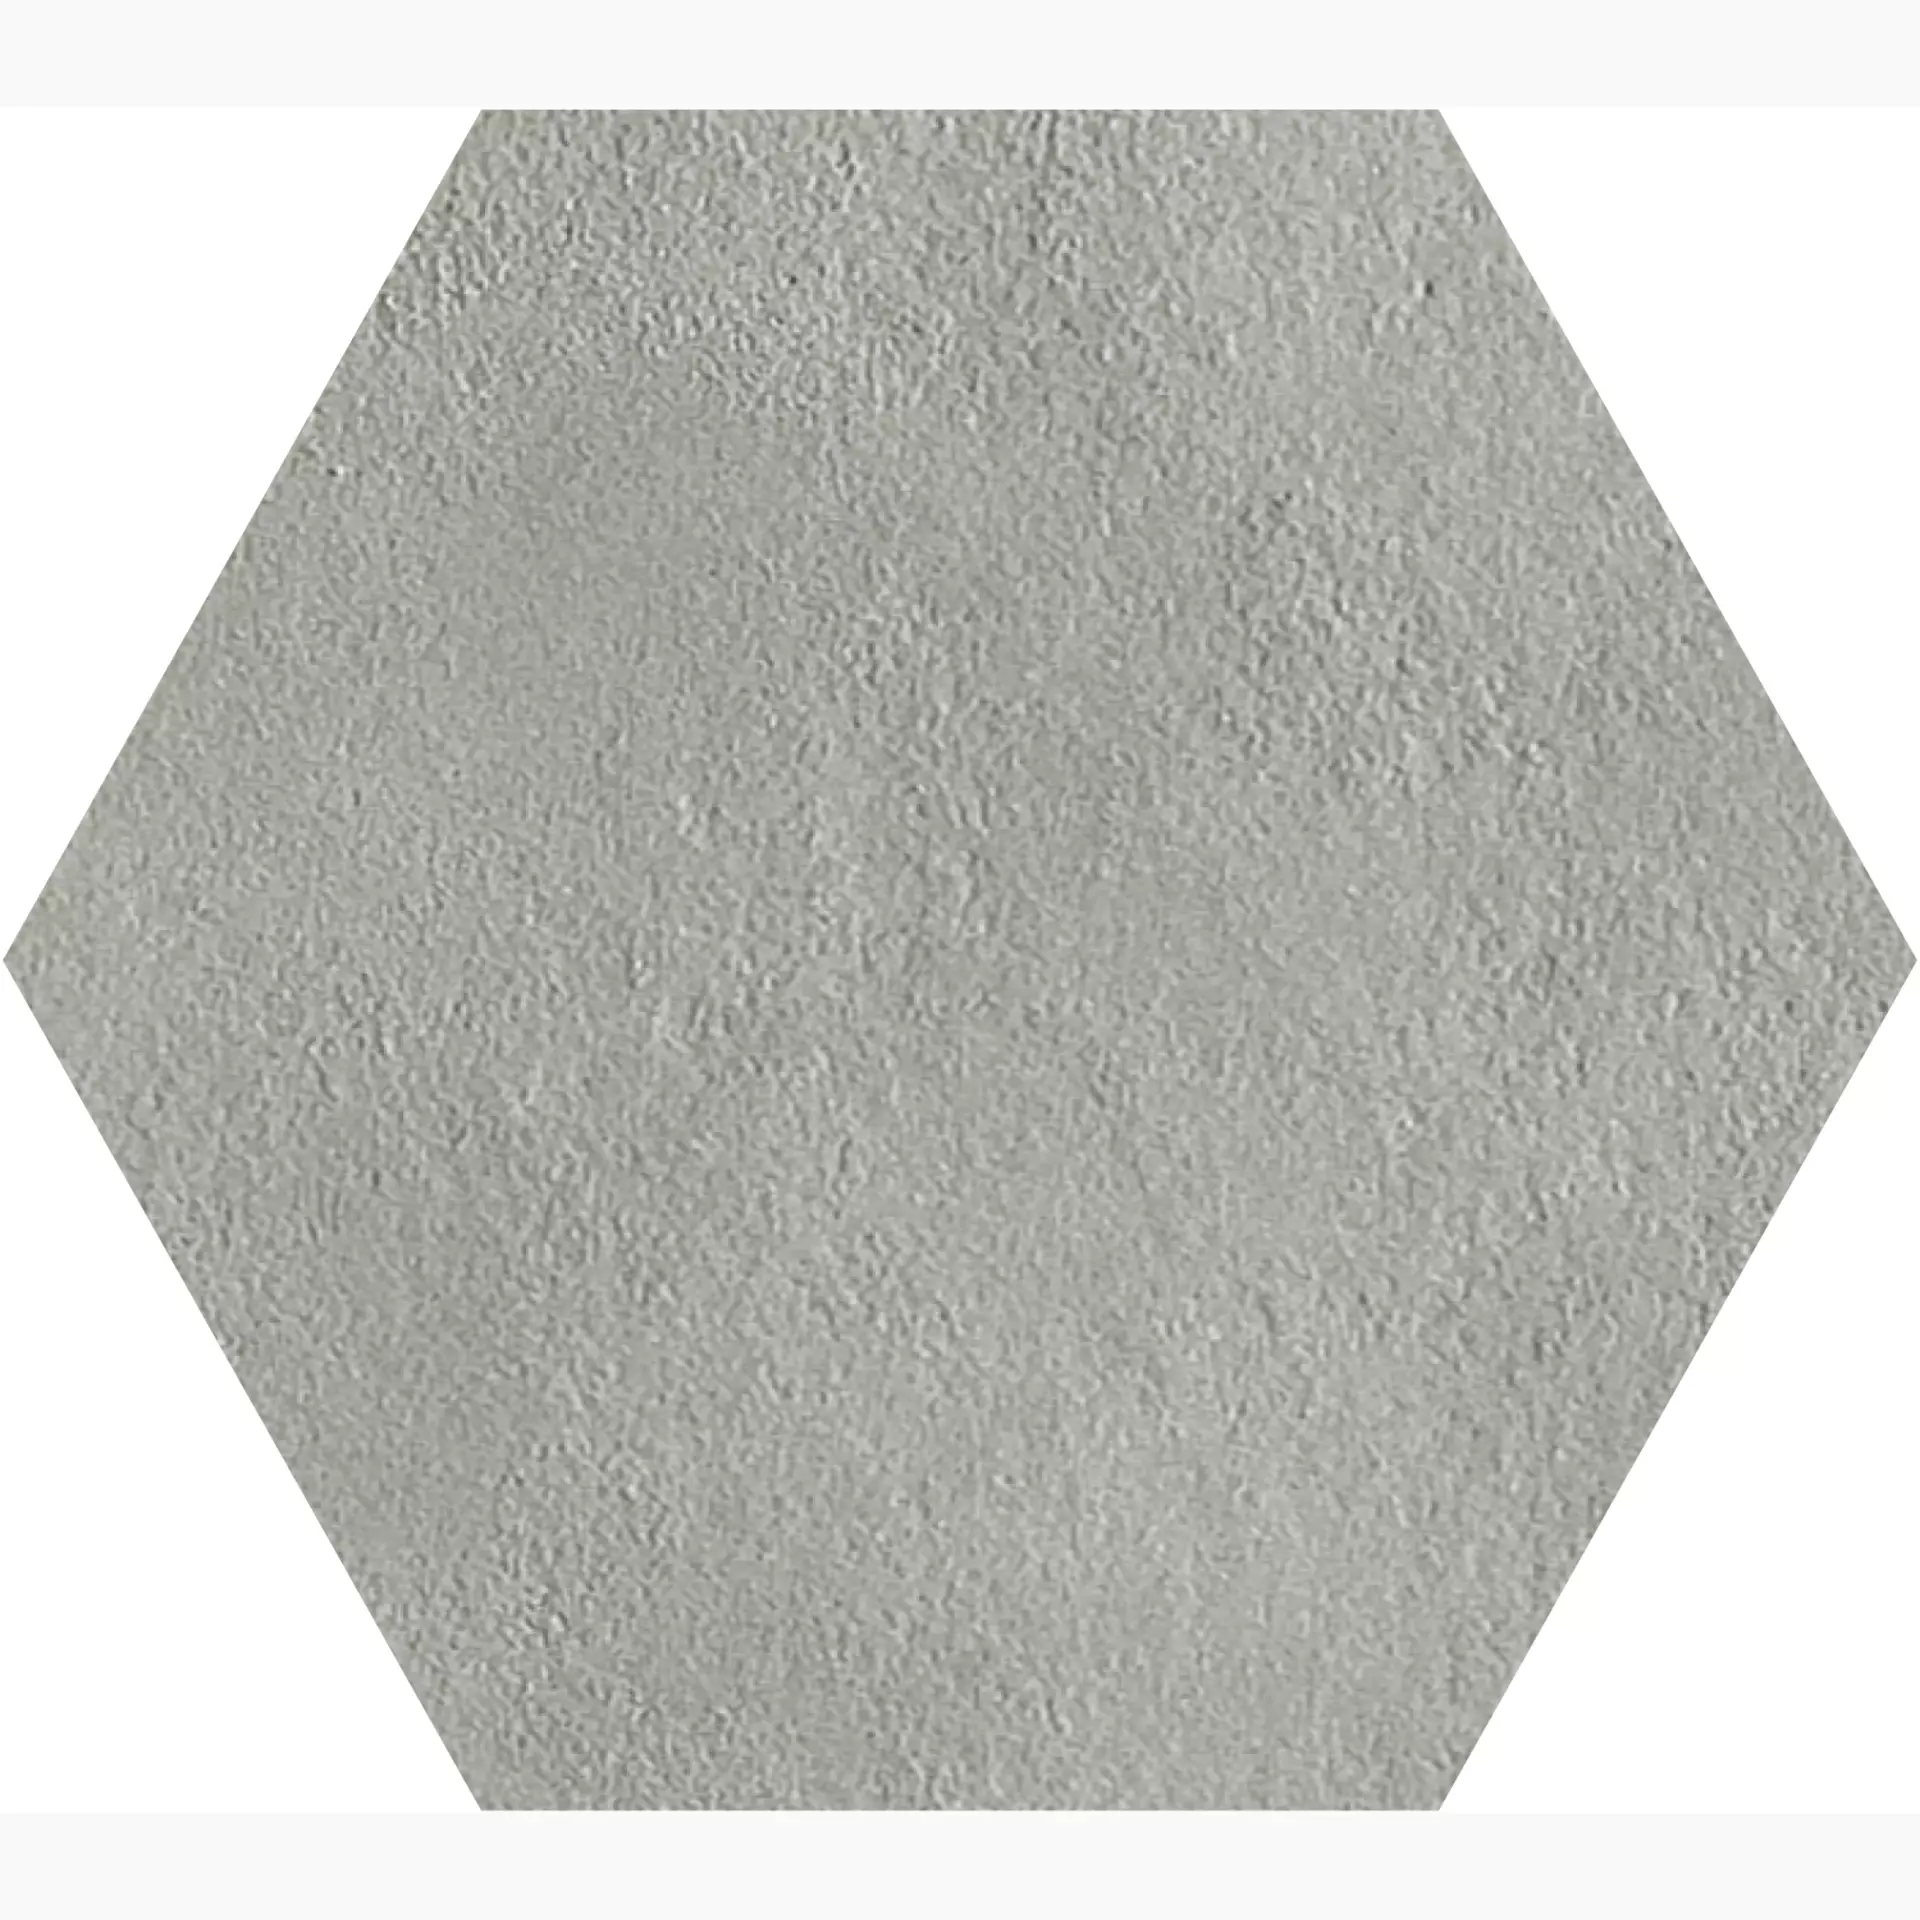 Gigacer Argilla Dry Material Dry PO9ESADRY matt 16x18cm Dekor Small Hexagon 6mm